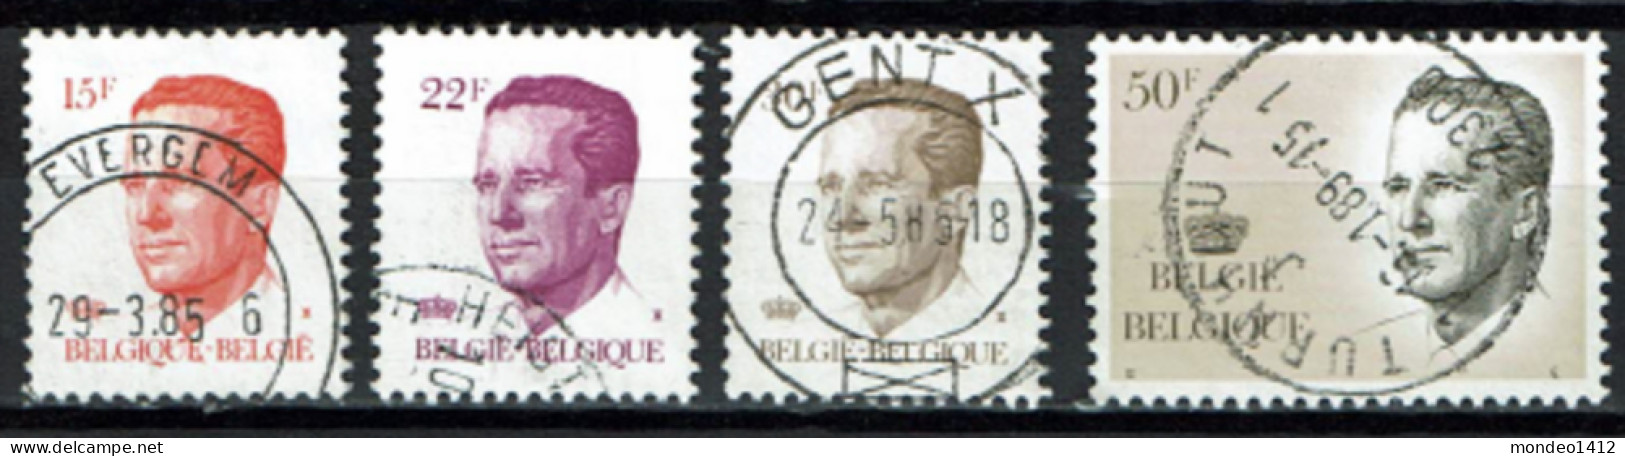 België 1984 OBP 2124/2127 - Série Courante Baudouin "Velghe" - Usati